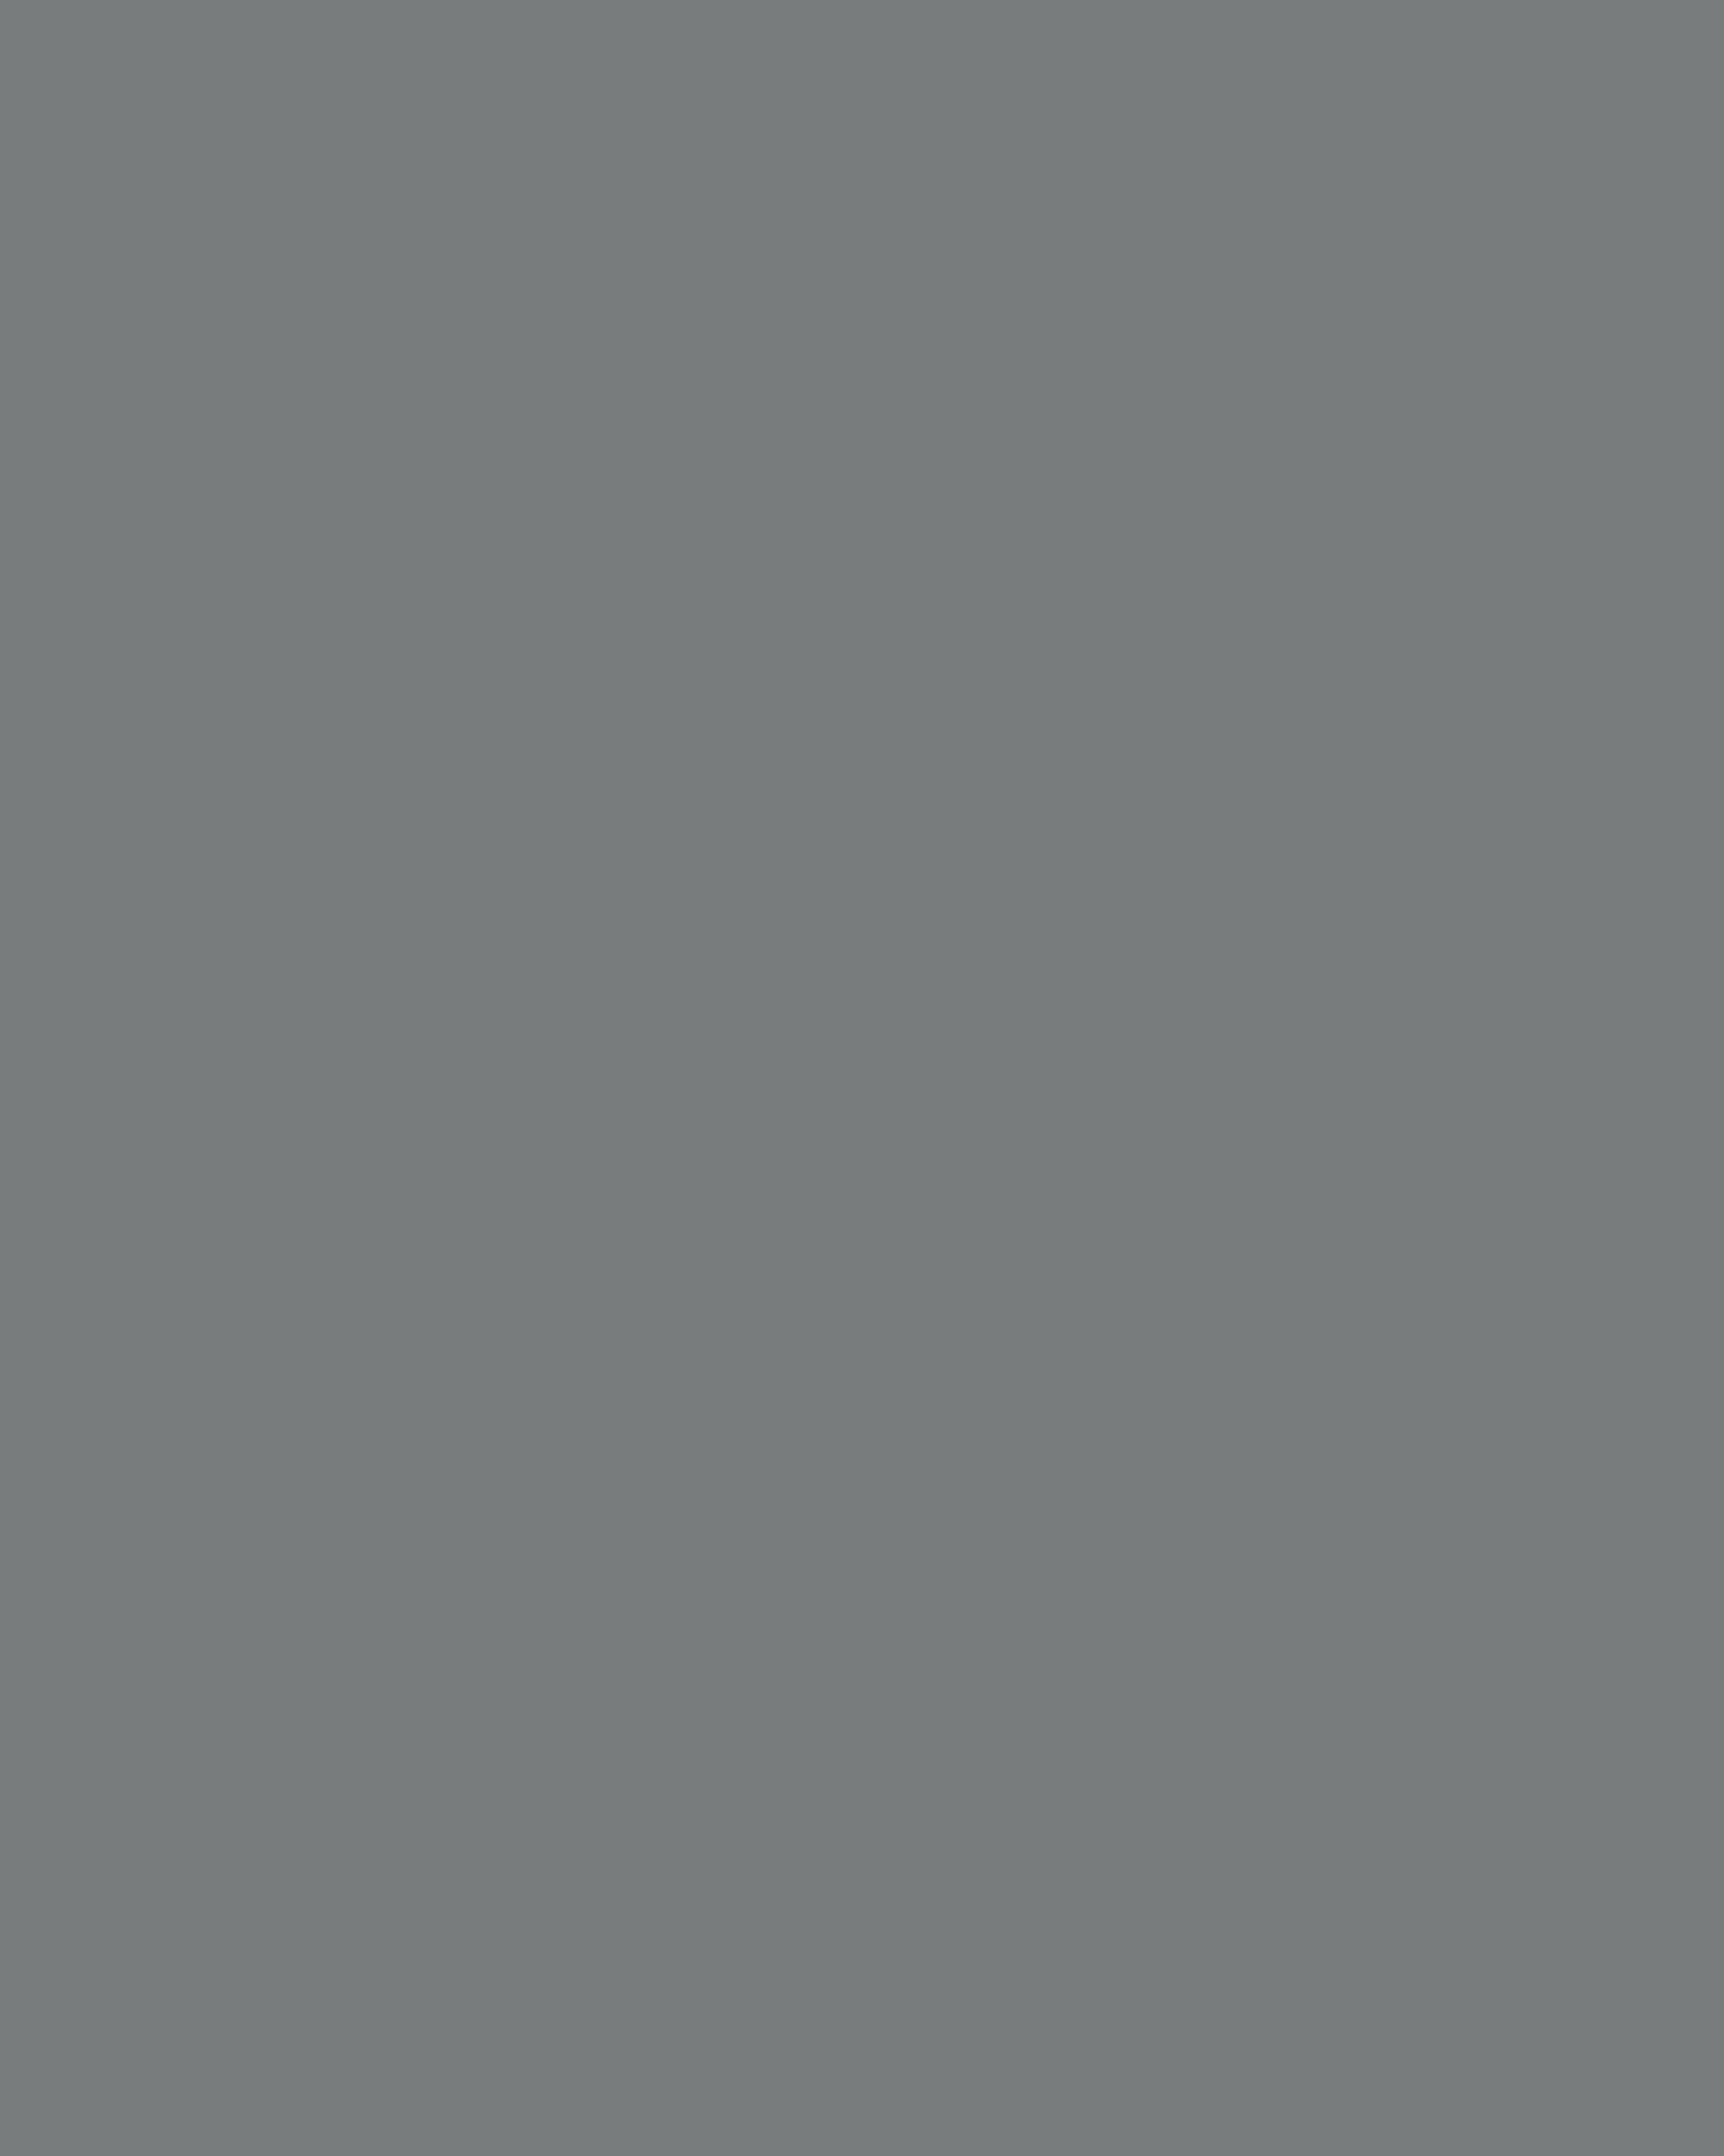 Алевтин Ведерников. Ночное небо. Ноктюрн. 1981. Абаканская картинная галерея имени Ф.Е. Пронских, Абакан